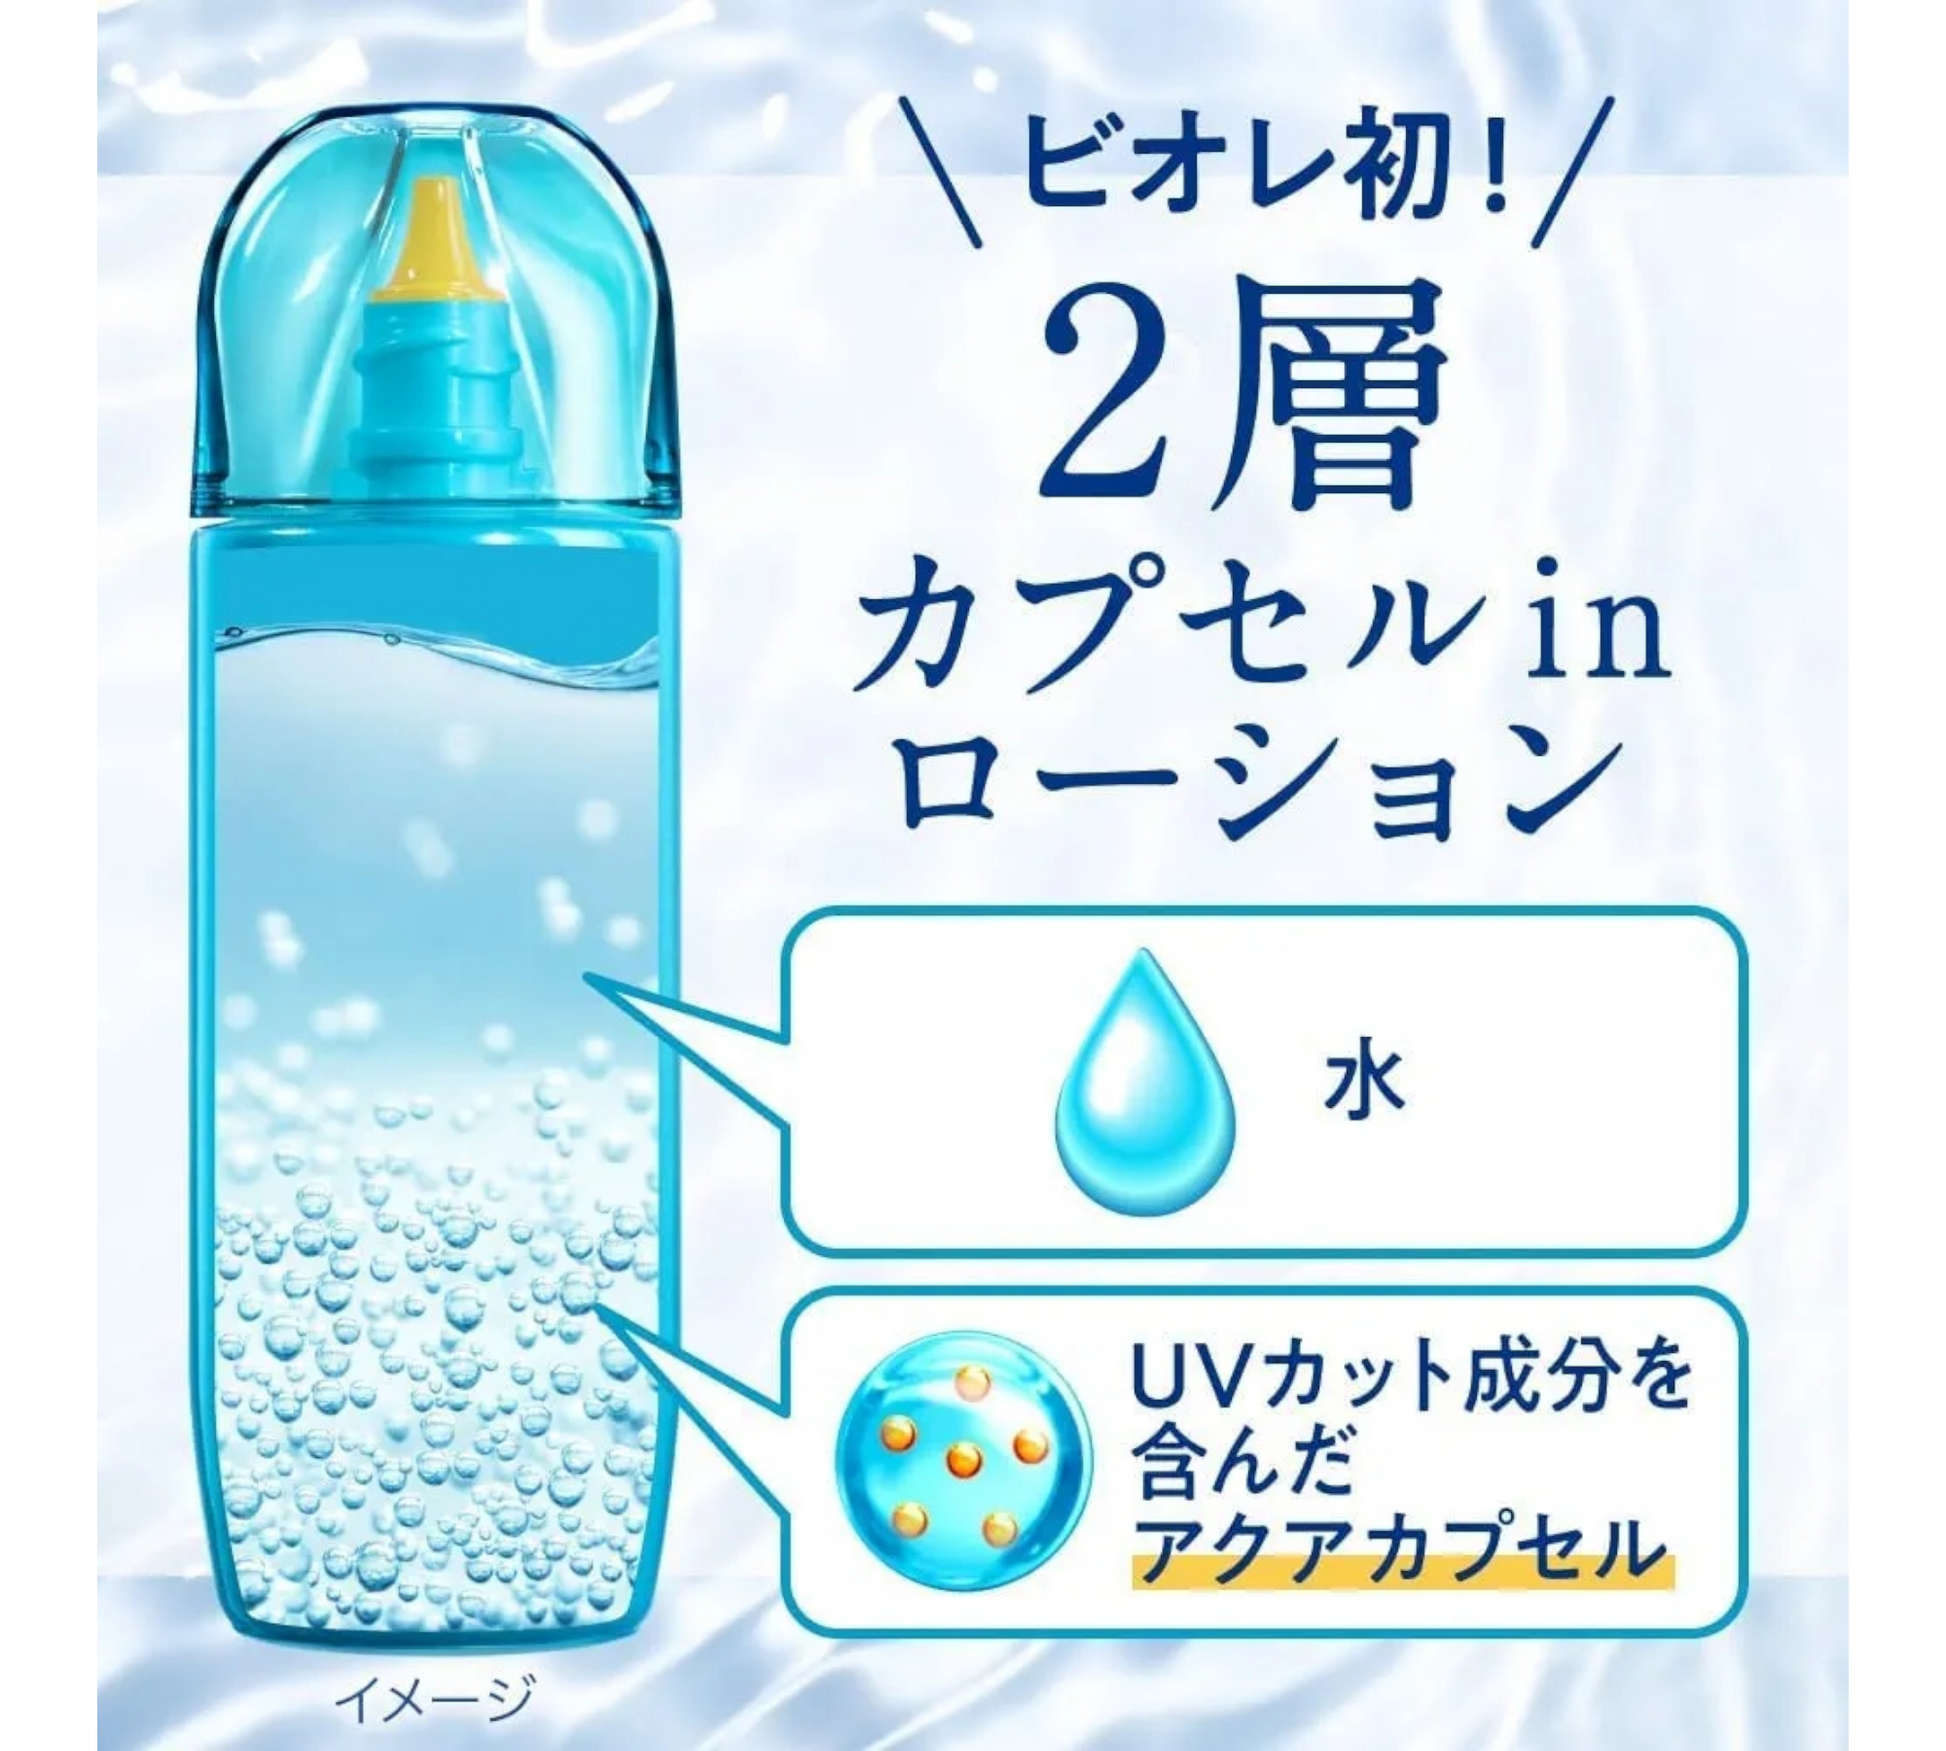 KAO Cupid Beauty Supplies Body Lotion Biore UV Aqua Rich Aqua Protect Lotion